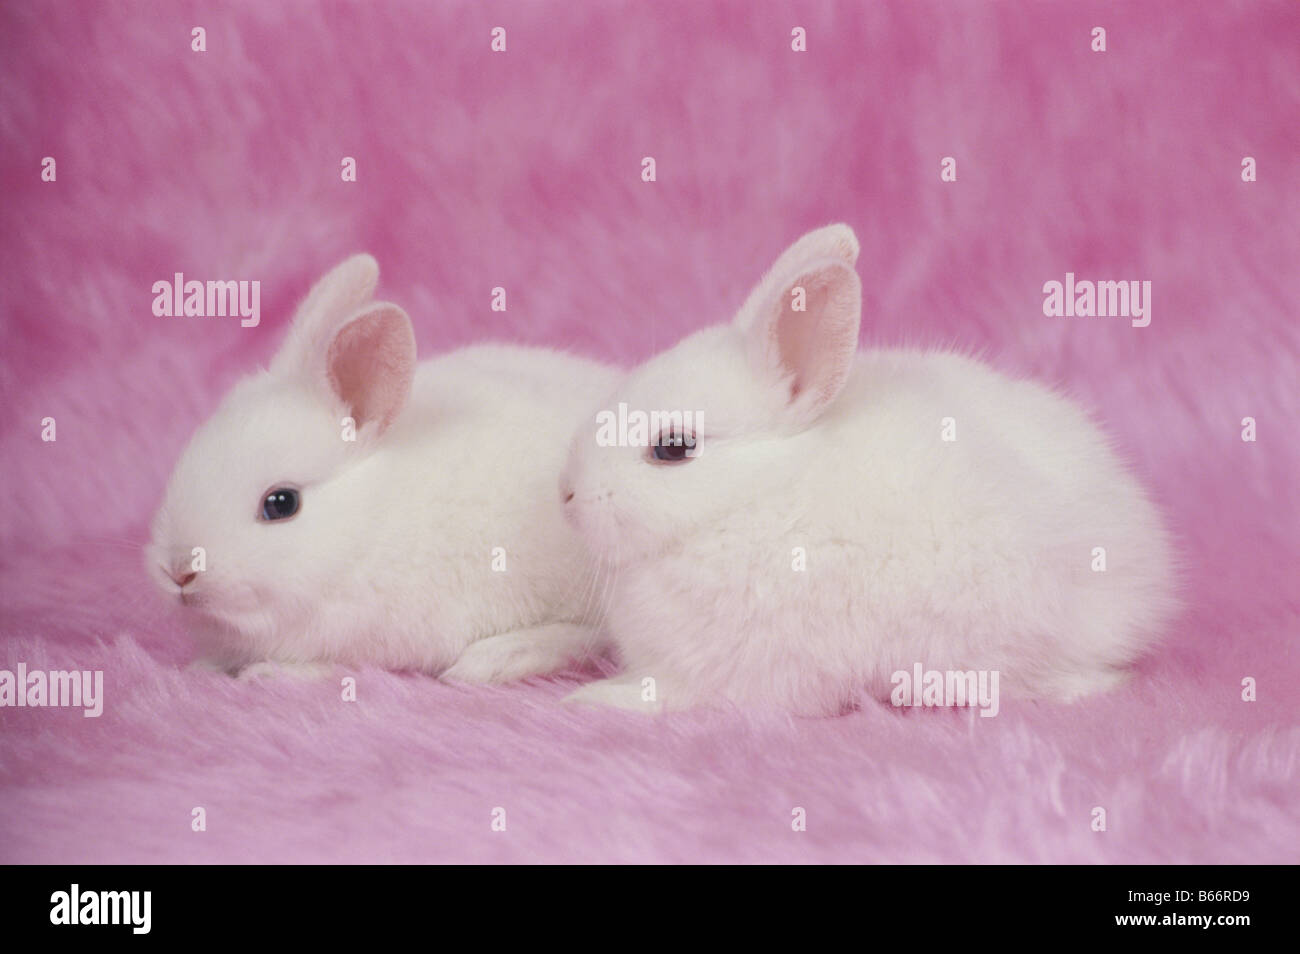 Top 999+ Rabbit Wallpaper Full HD, 4K✓Free to Use